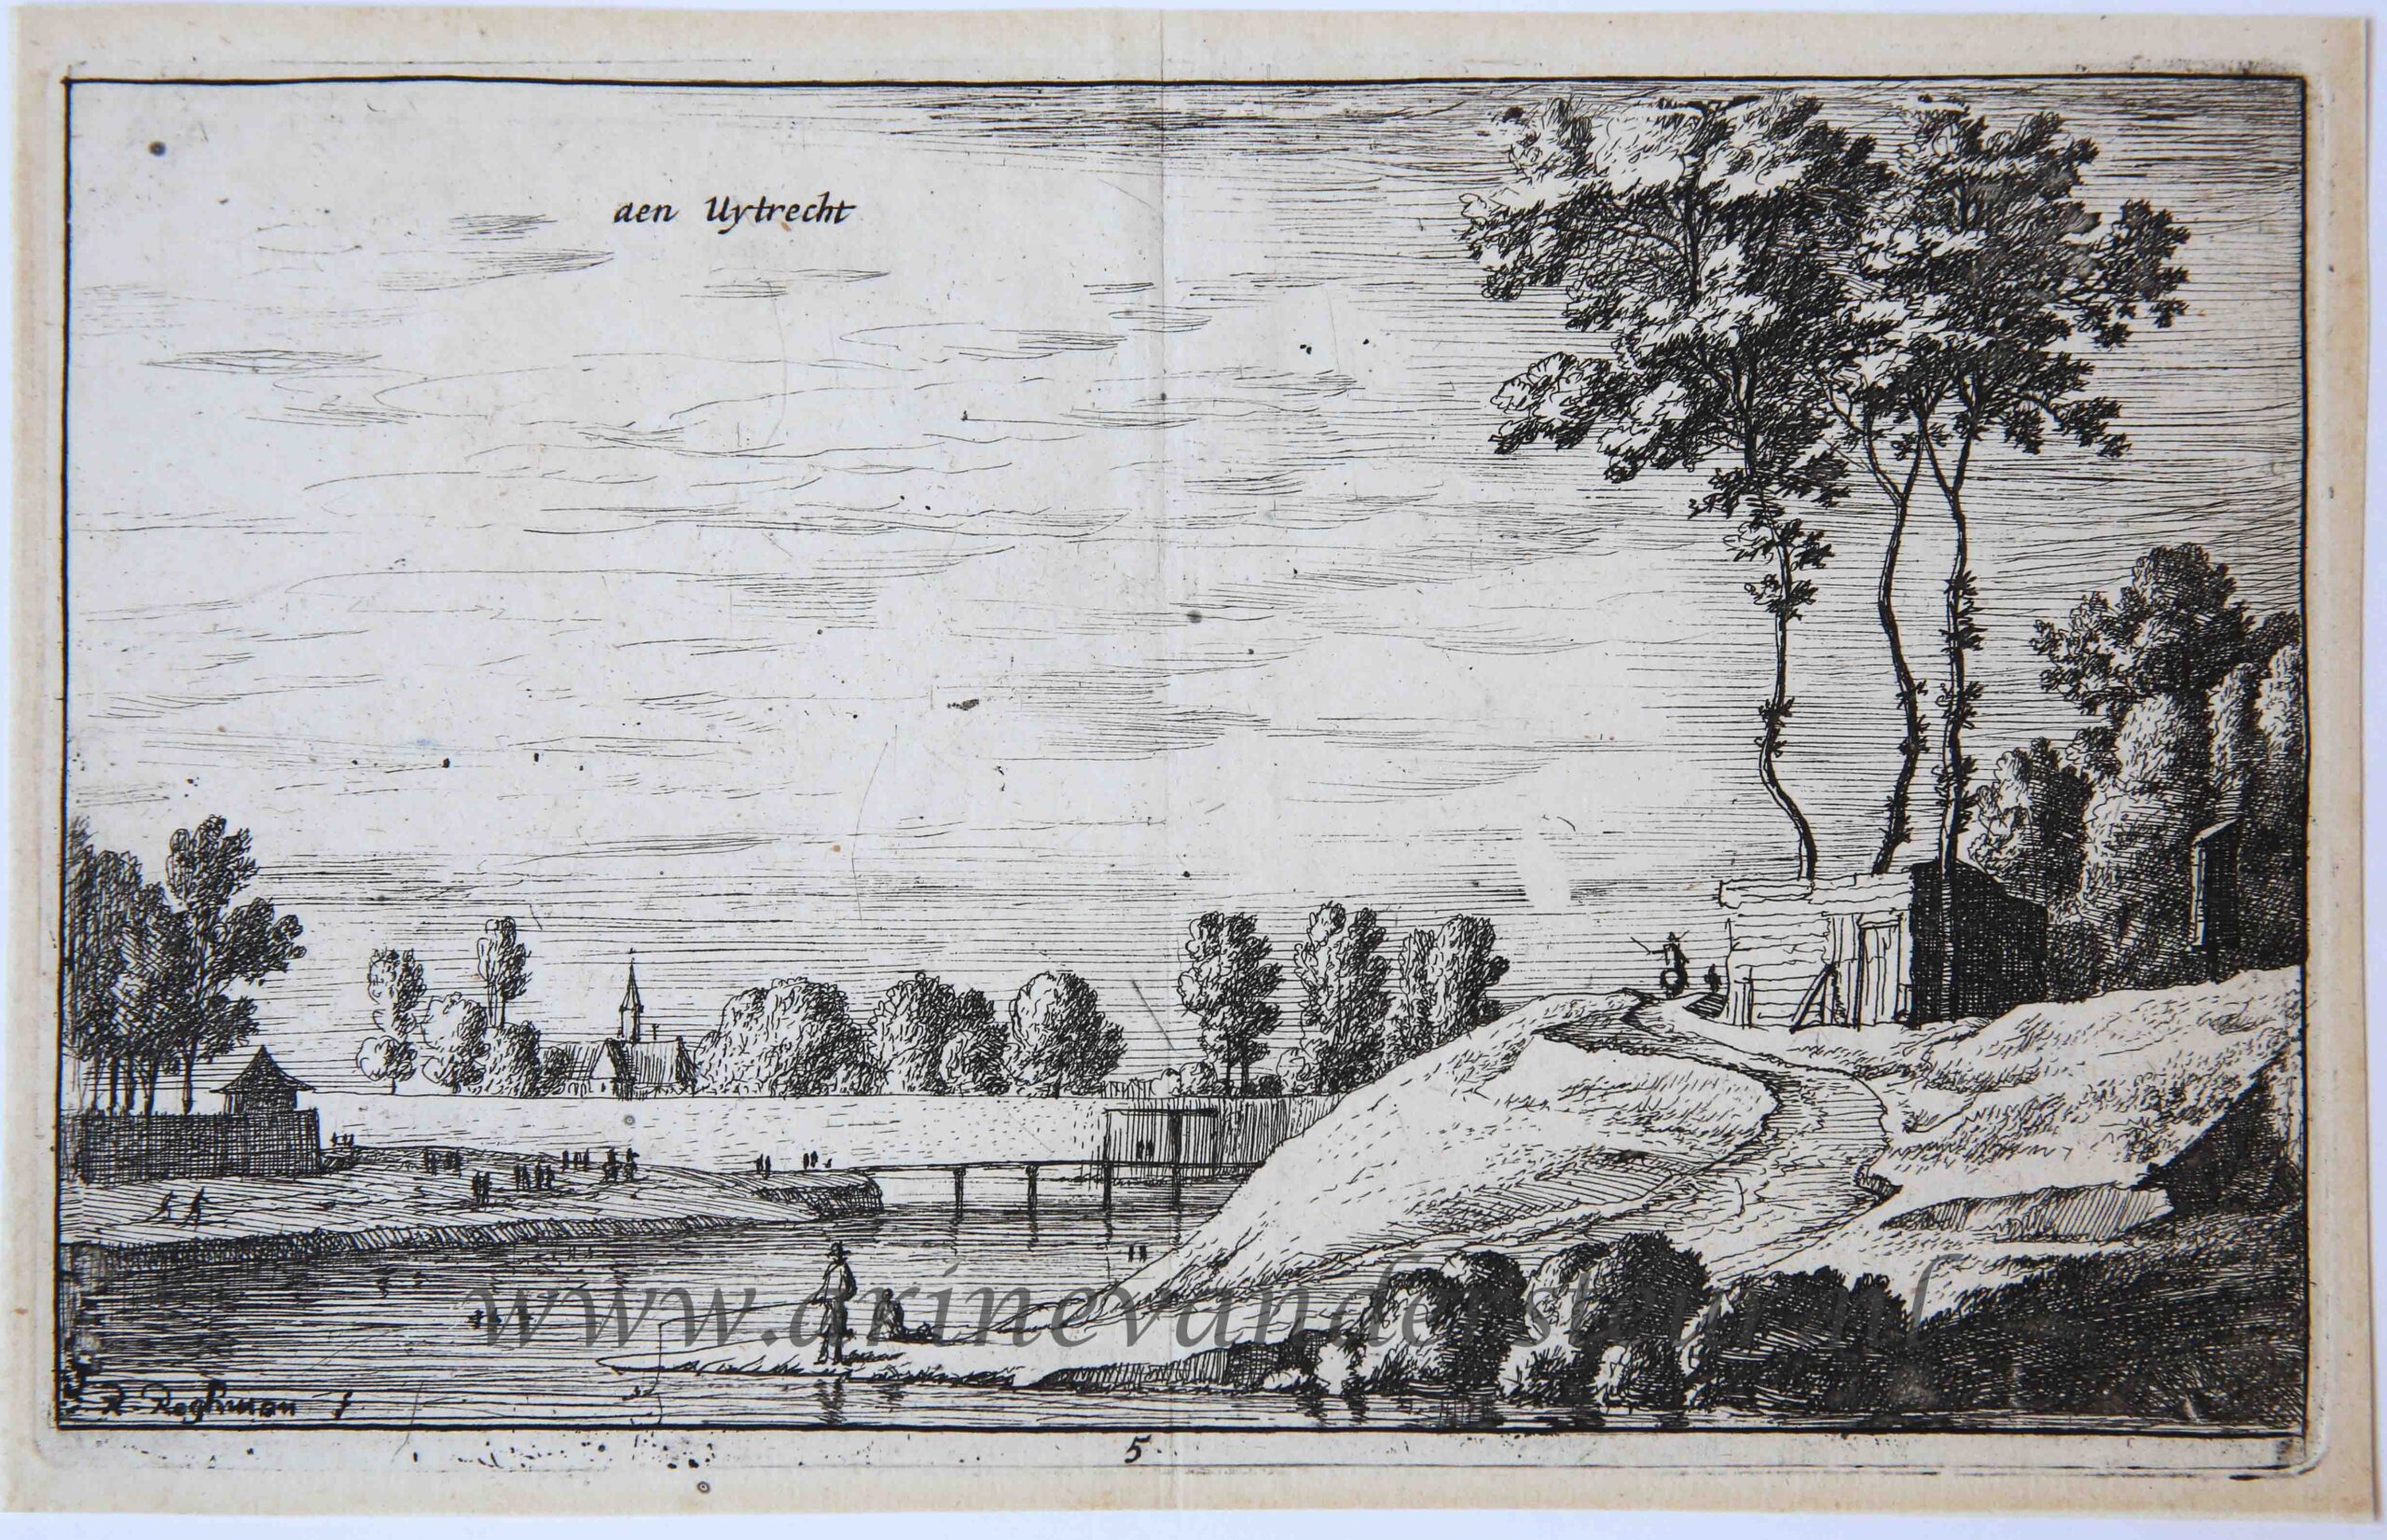 [Antique print, etching] Aen Uytrecht (buiten Utrecht), published ca. 1650.